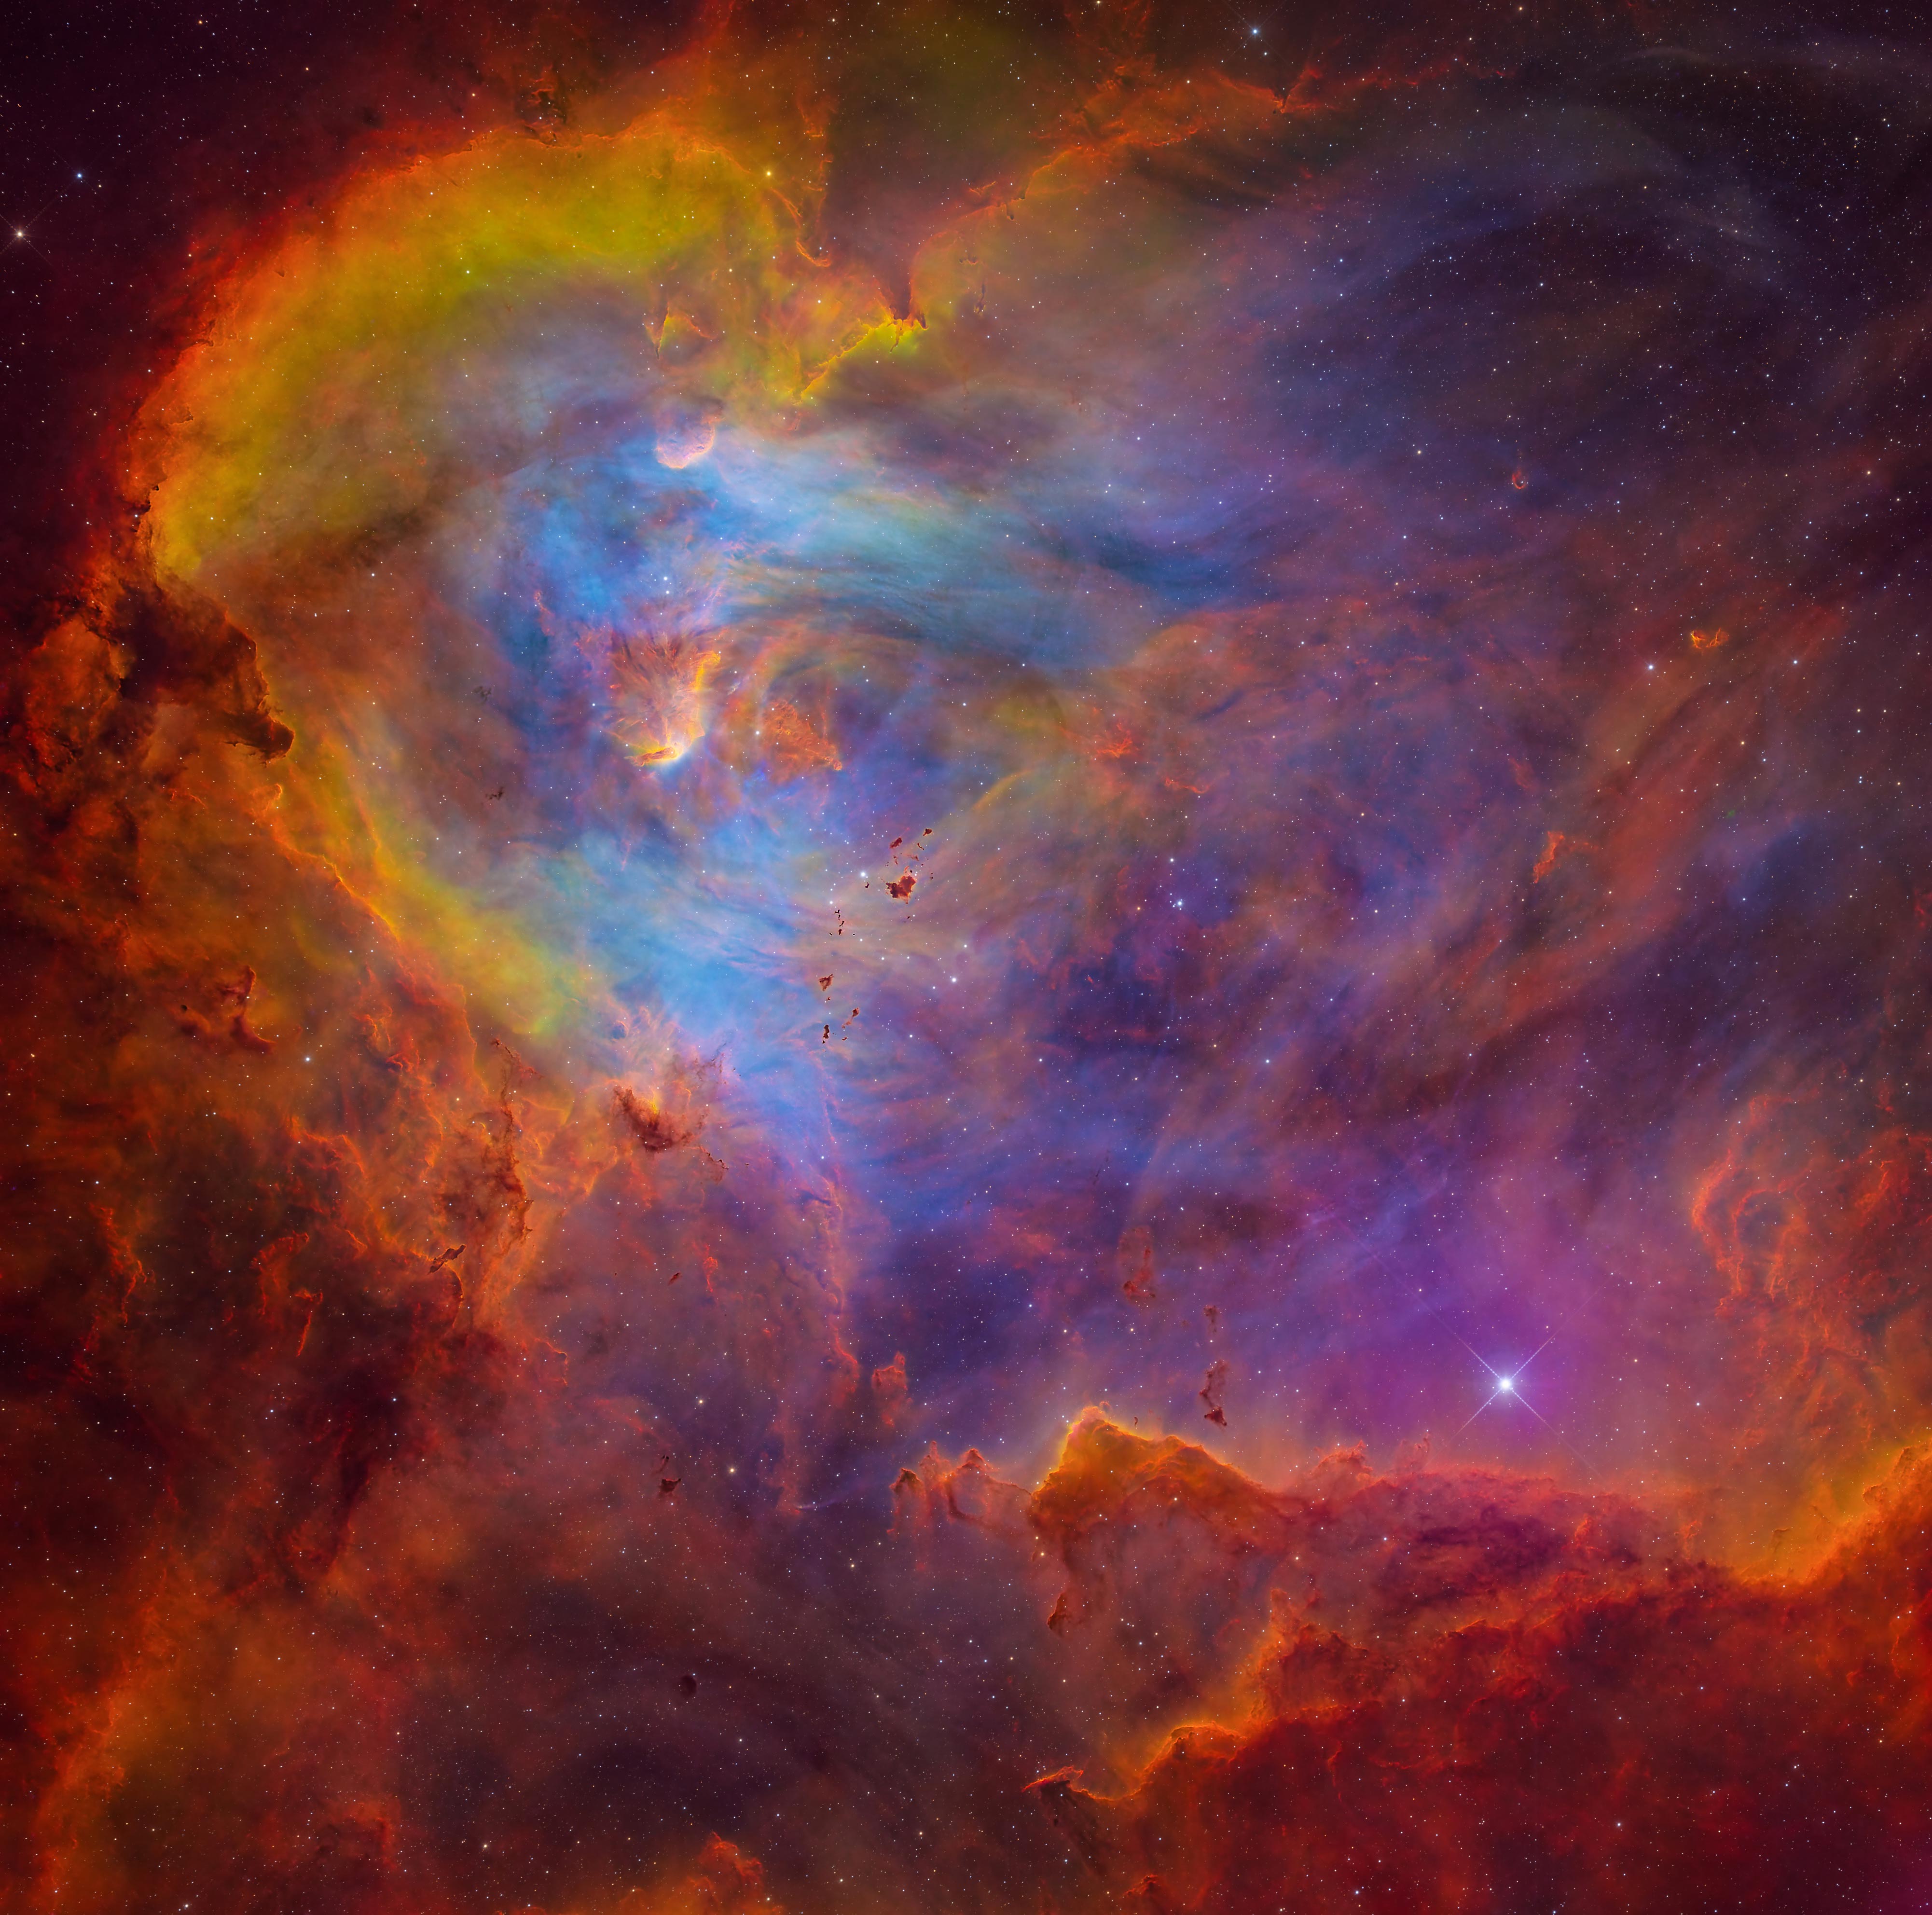 A gaseous nebula with vibrant multi-colored swirls.